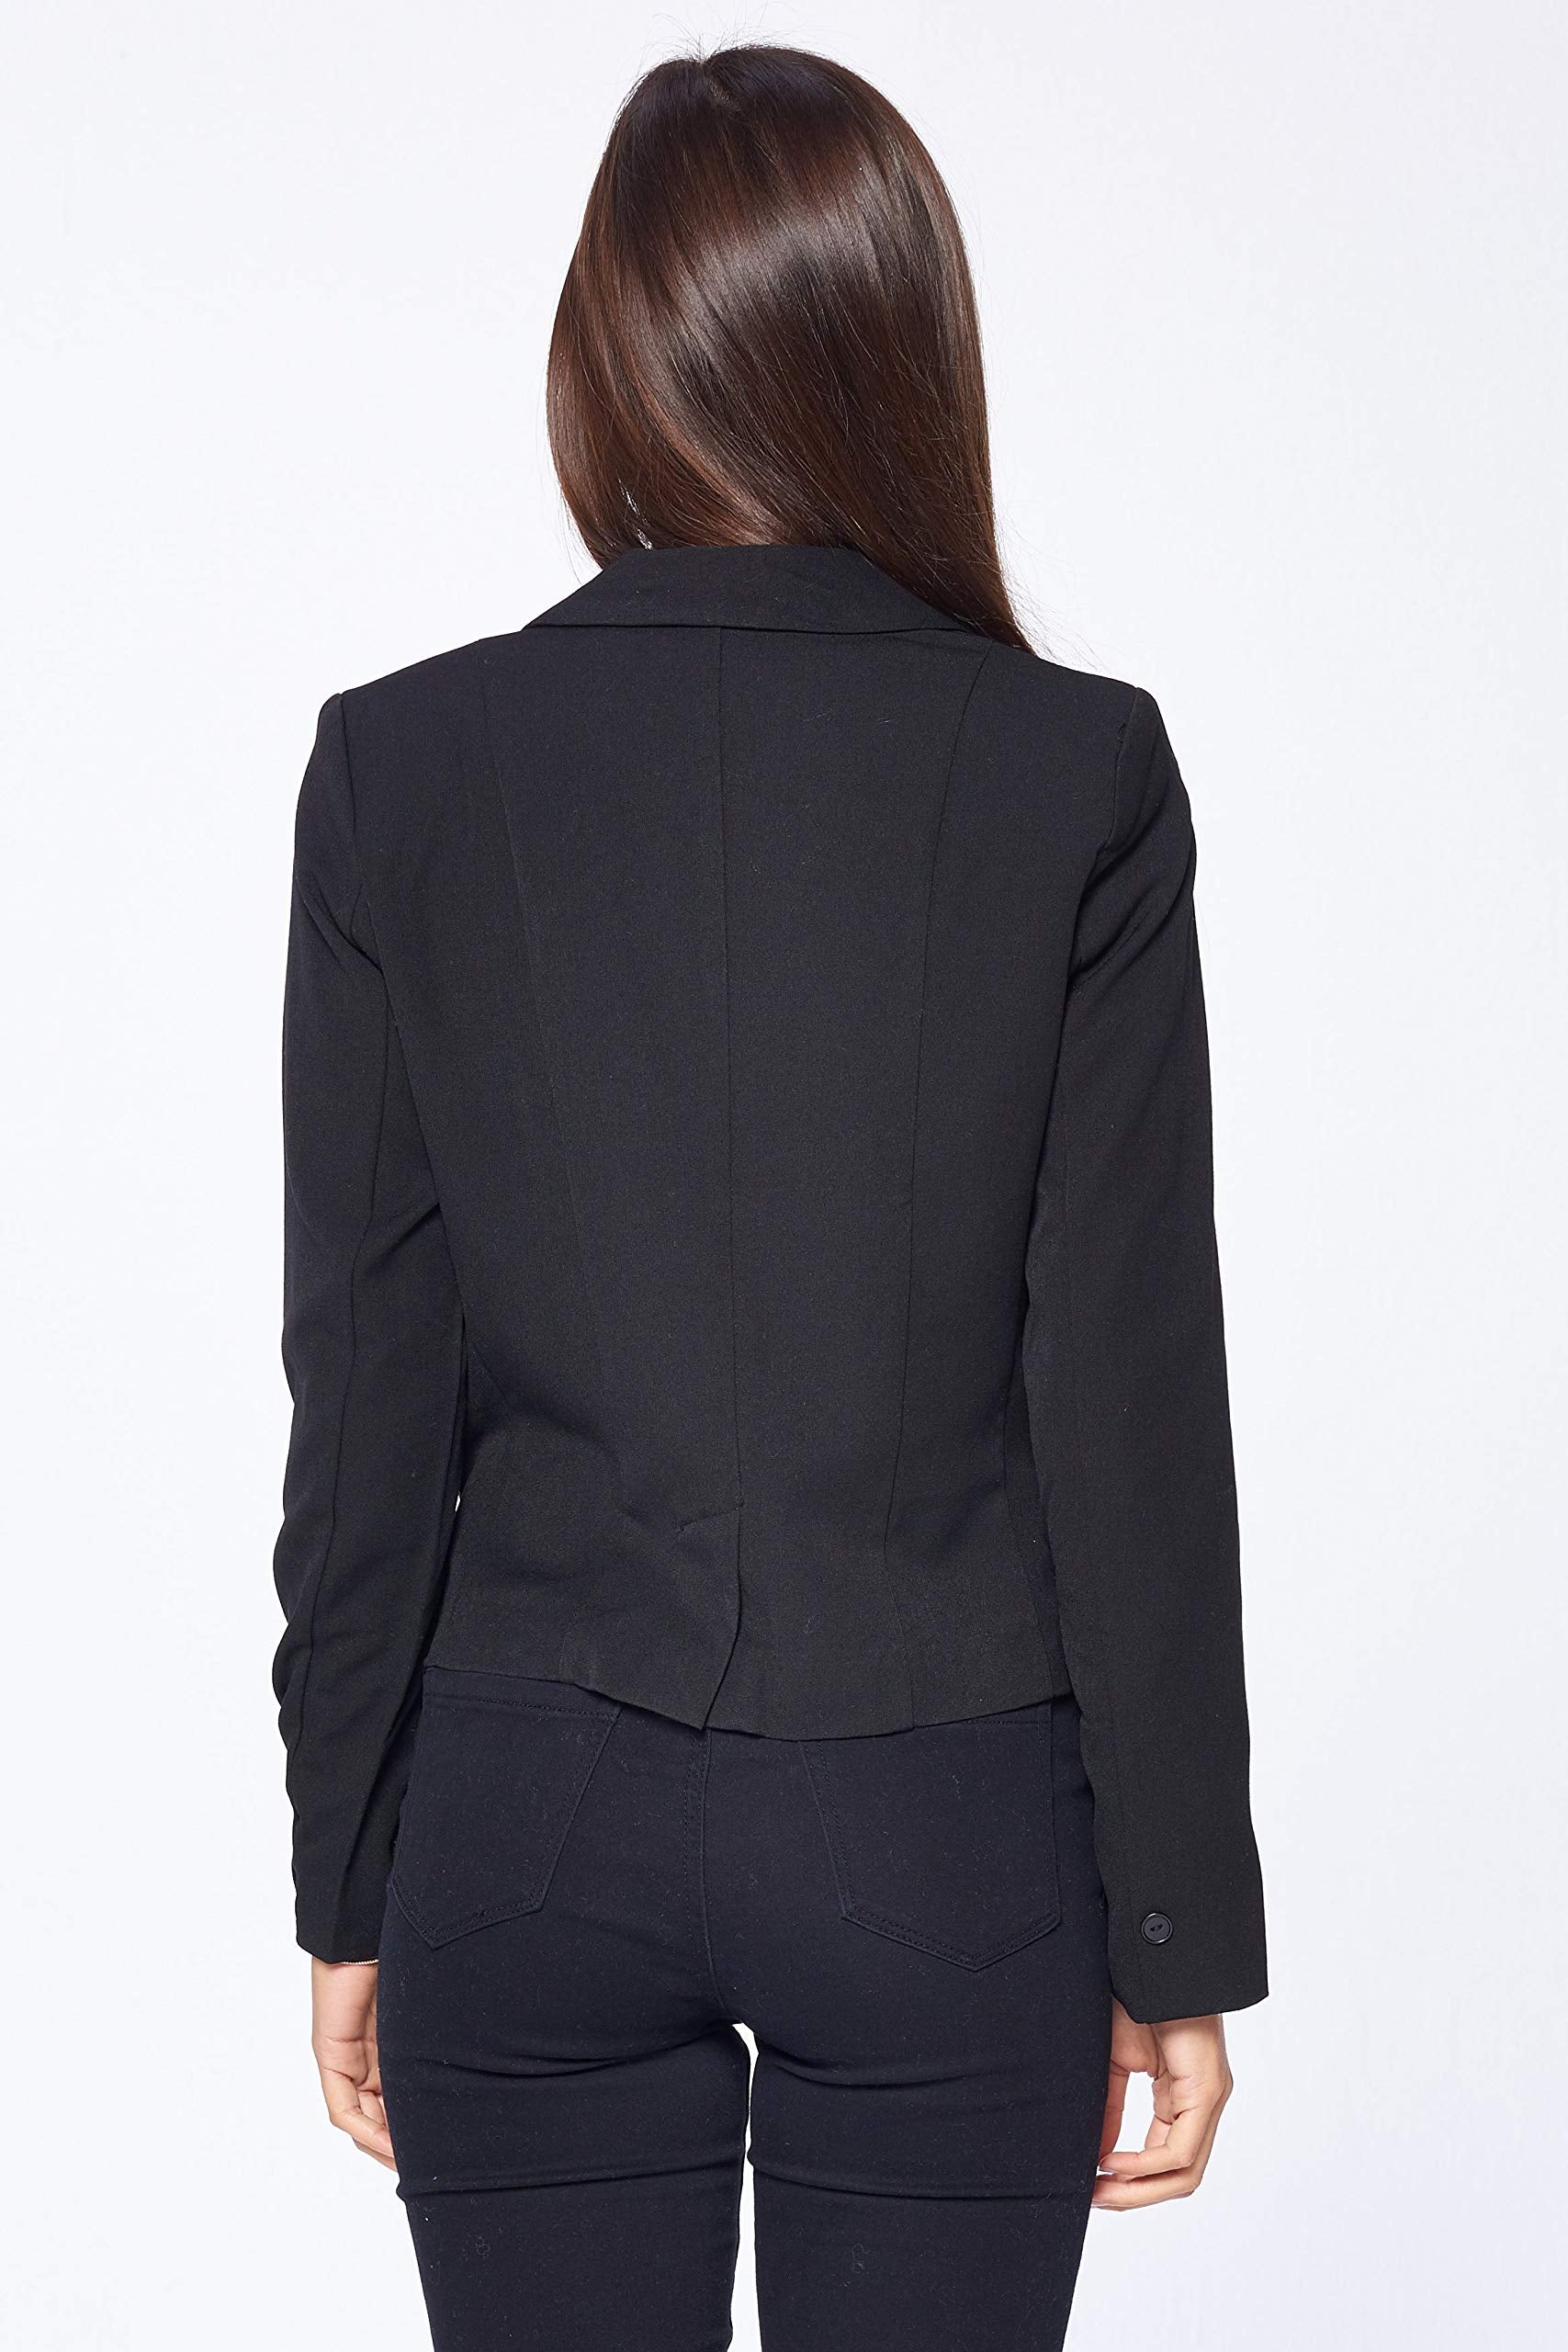 Khanomak Women's Long Sleeve Single Breasted Blazer Jacket